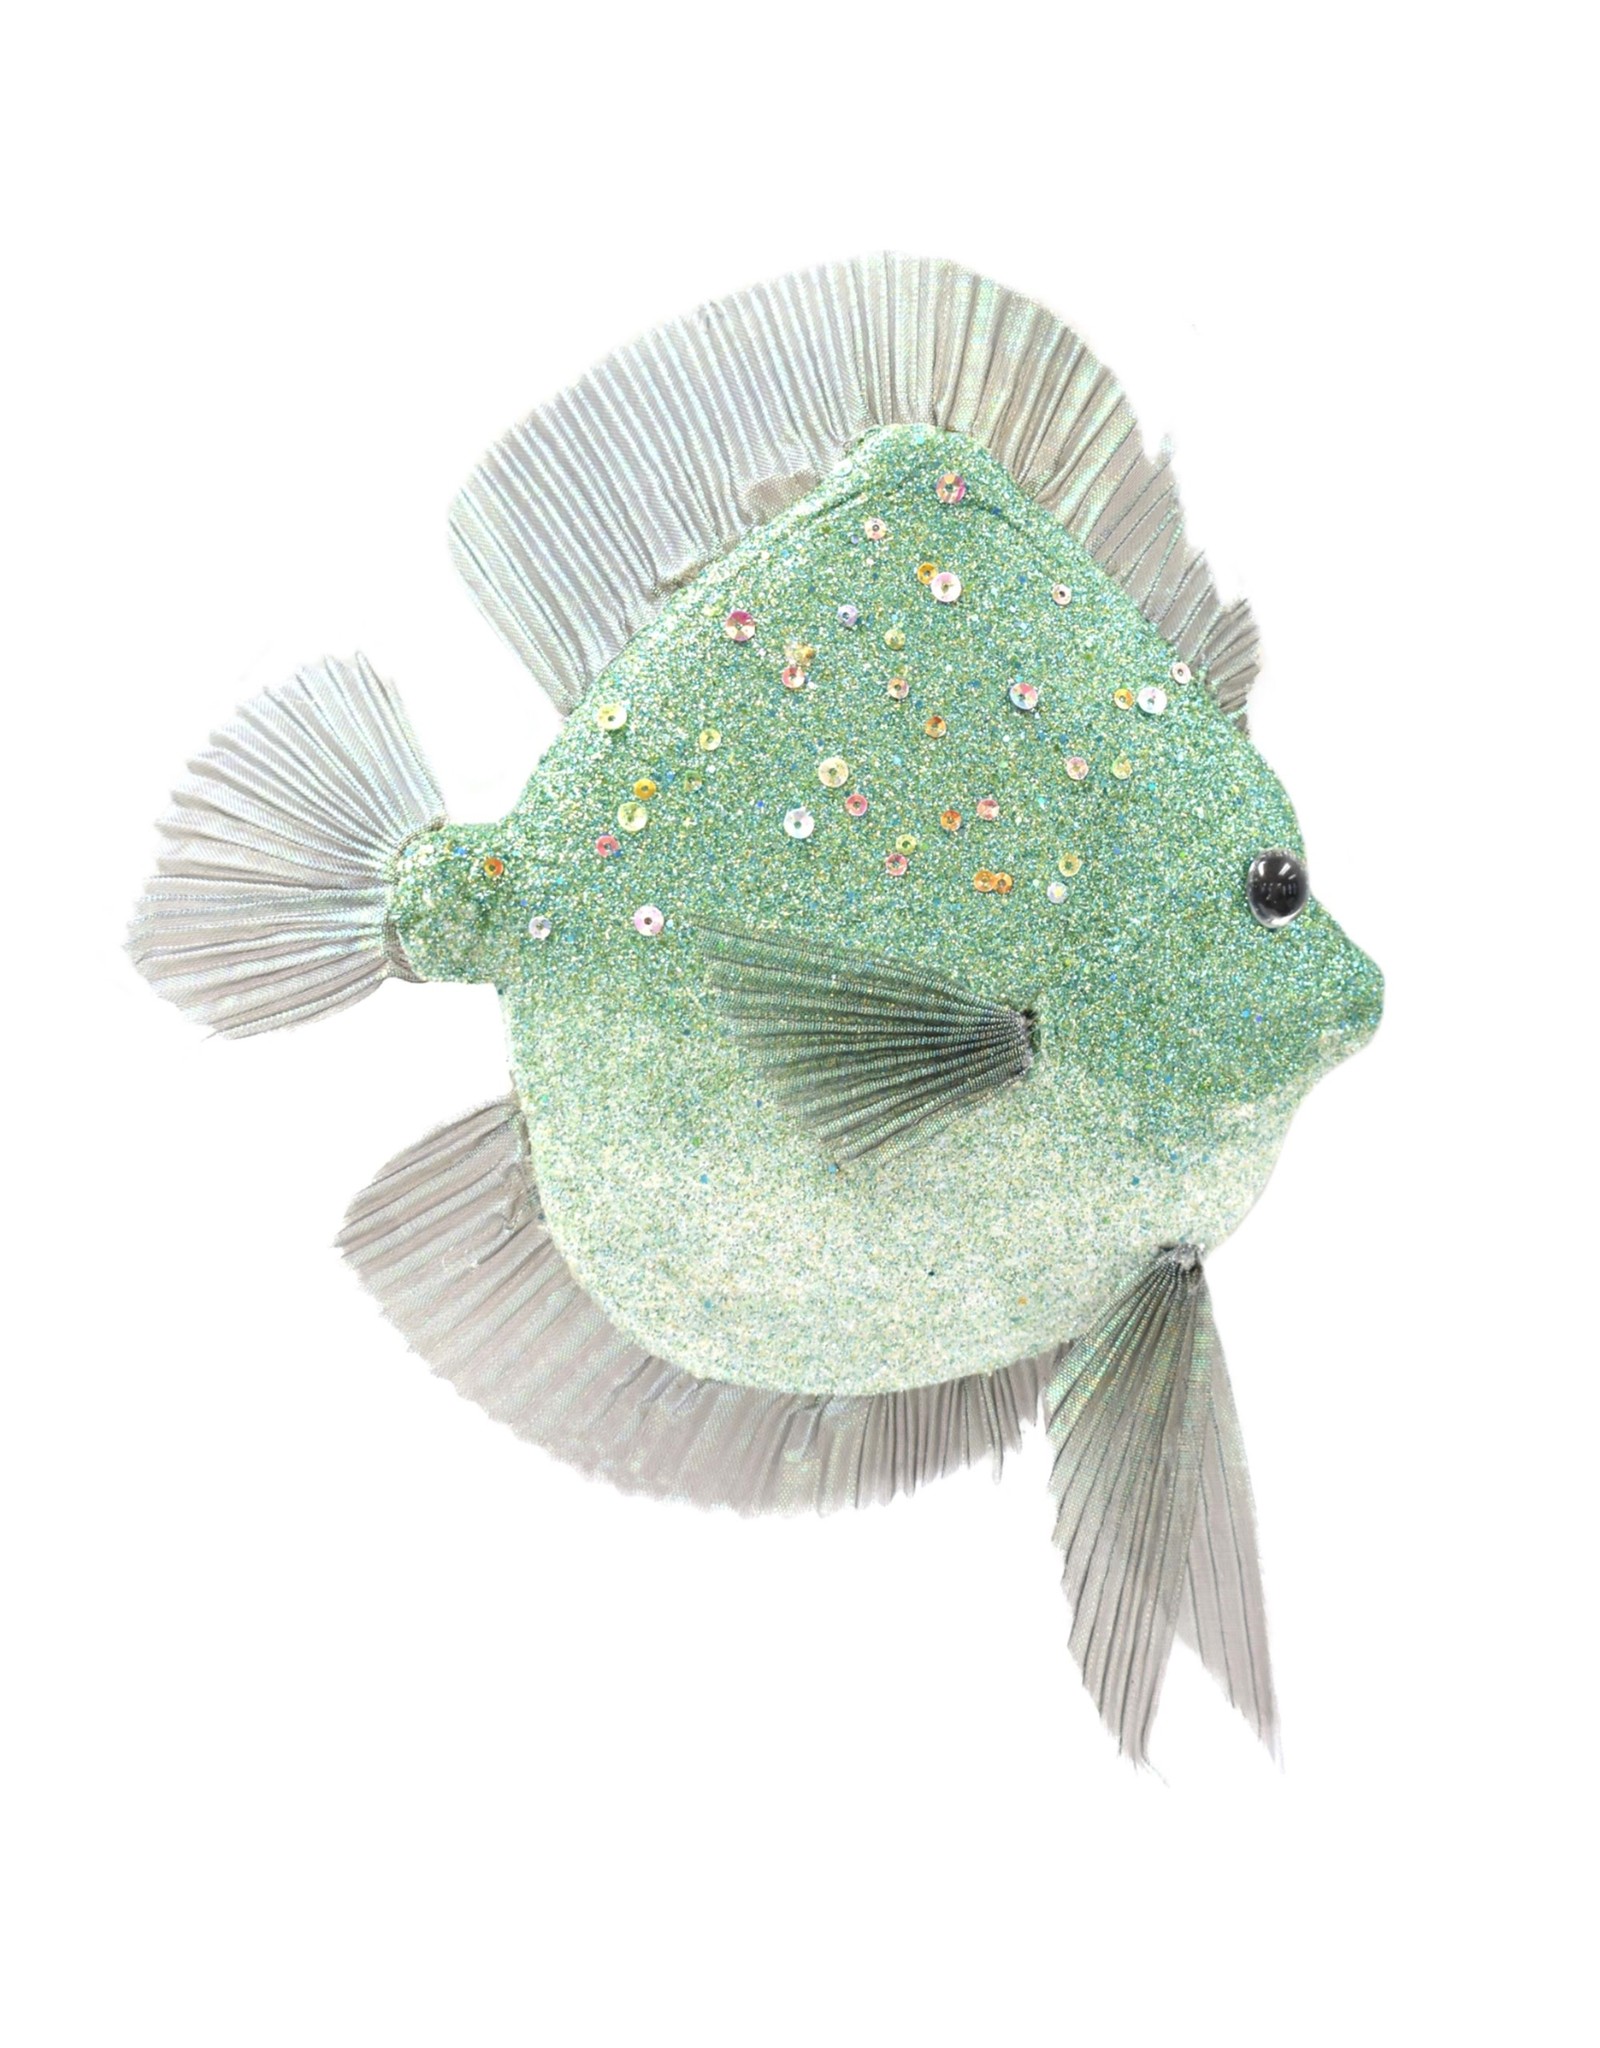 David Christophers Glittered Sequined Reef Fish Sea Foam 9.75x7.75"